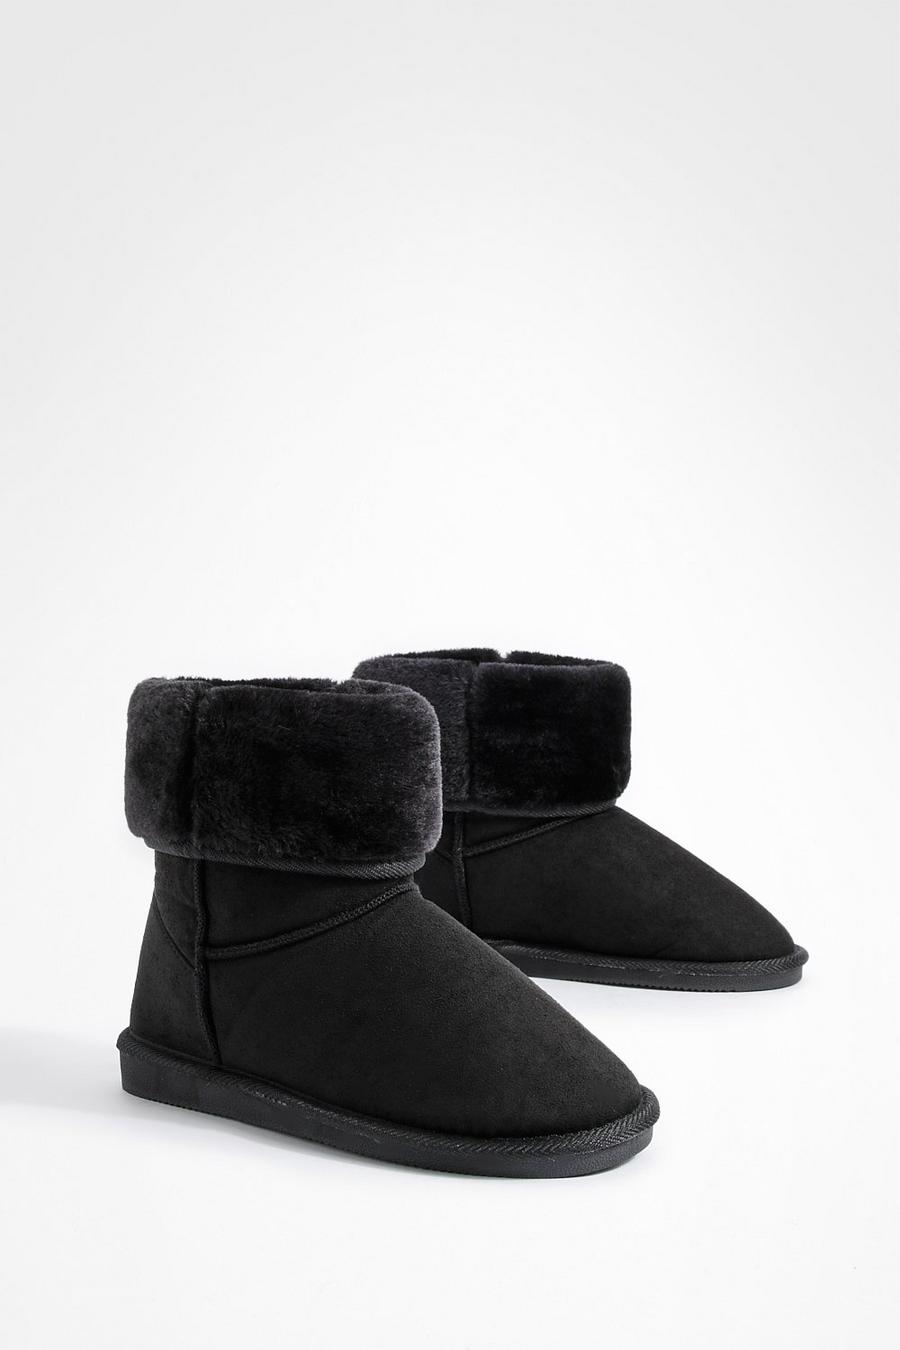 Black Fur Foldover Cosy Boots